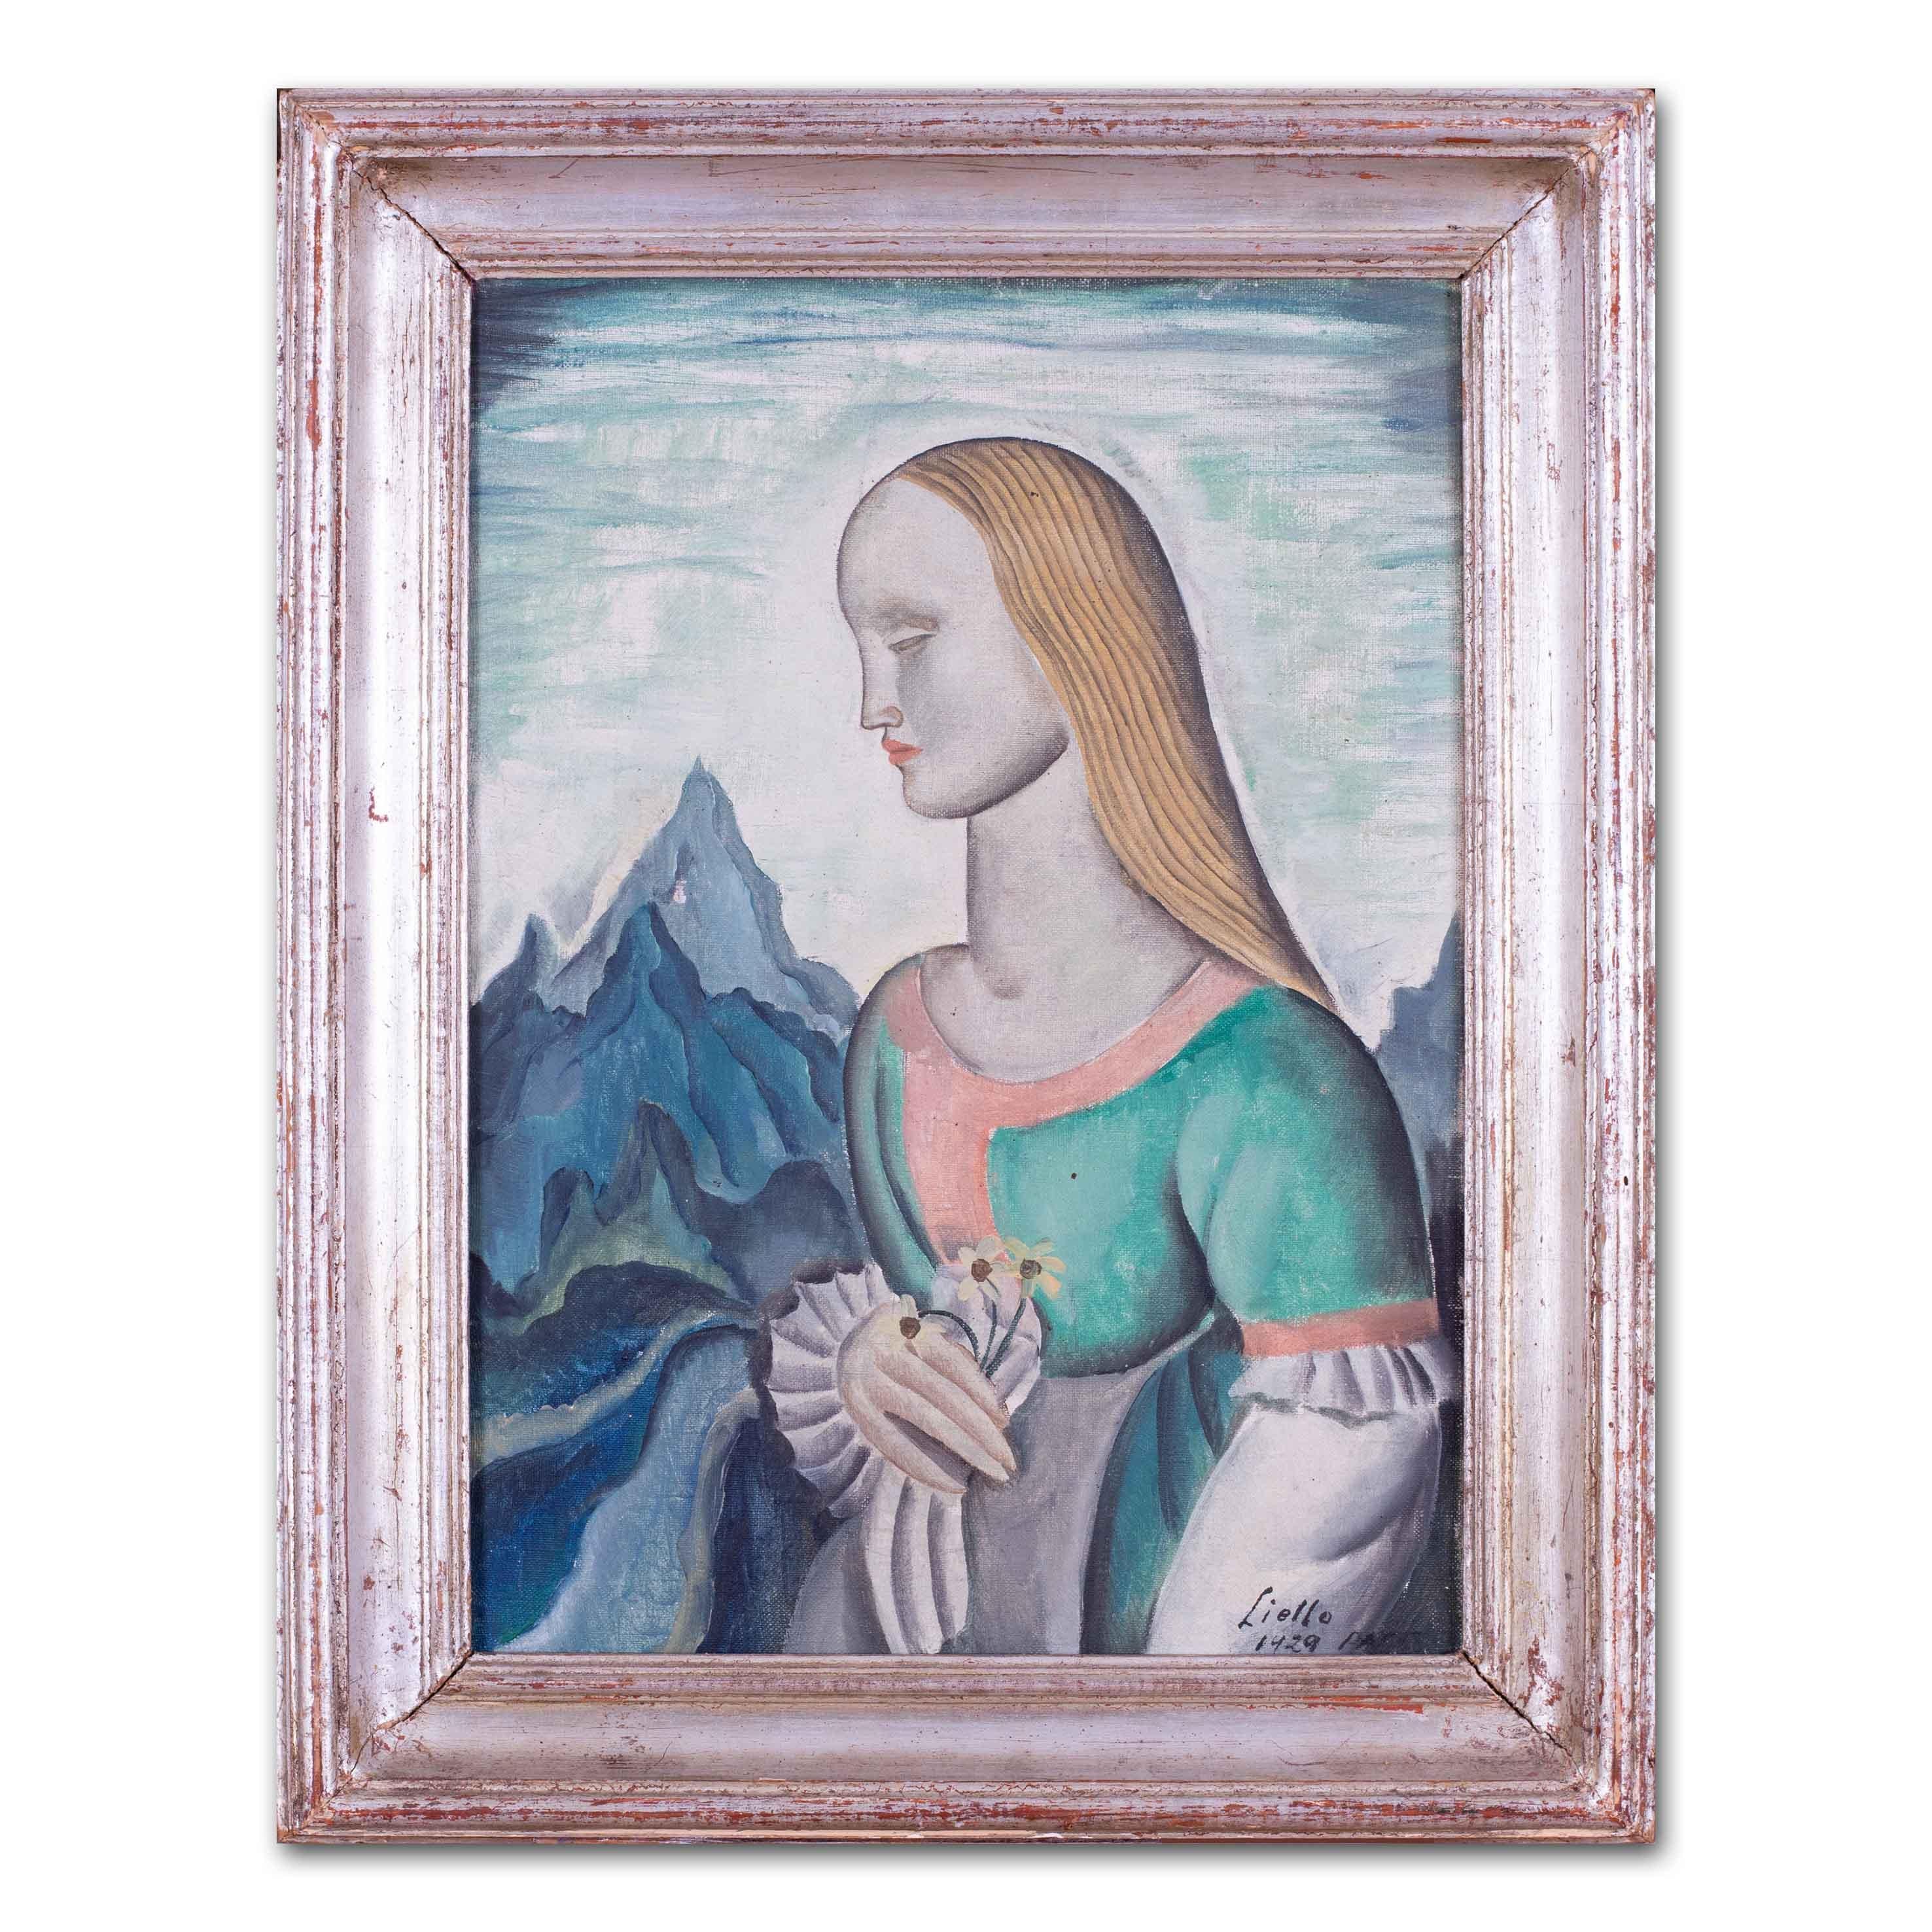 1929 art deco Oil painting of a lady by Italian / American artist Liello - Gray Figurative Painting by Giuseppe (John) Liello